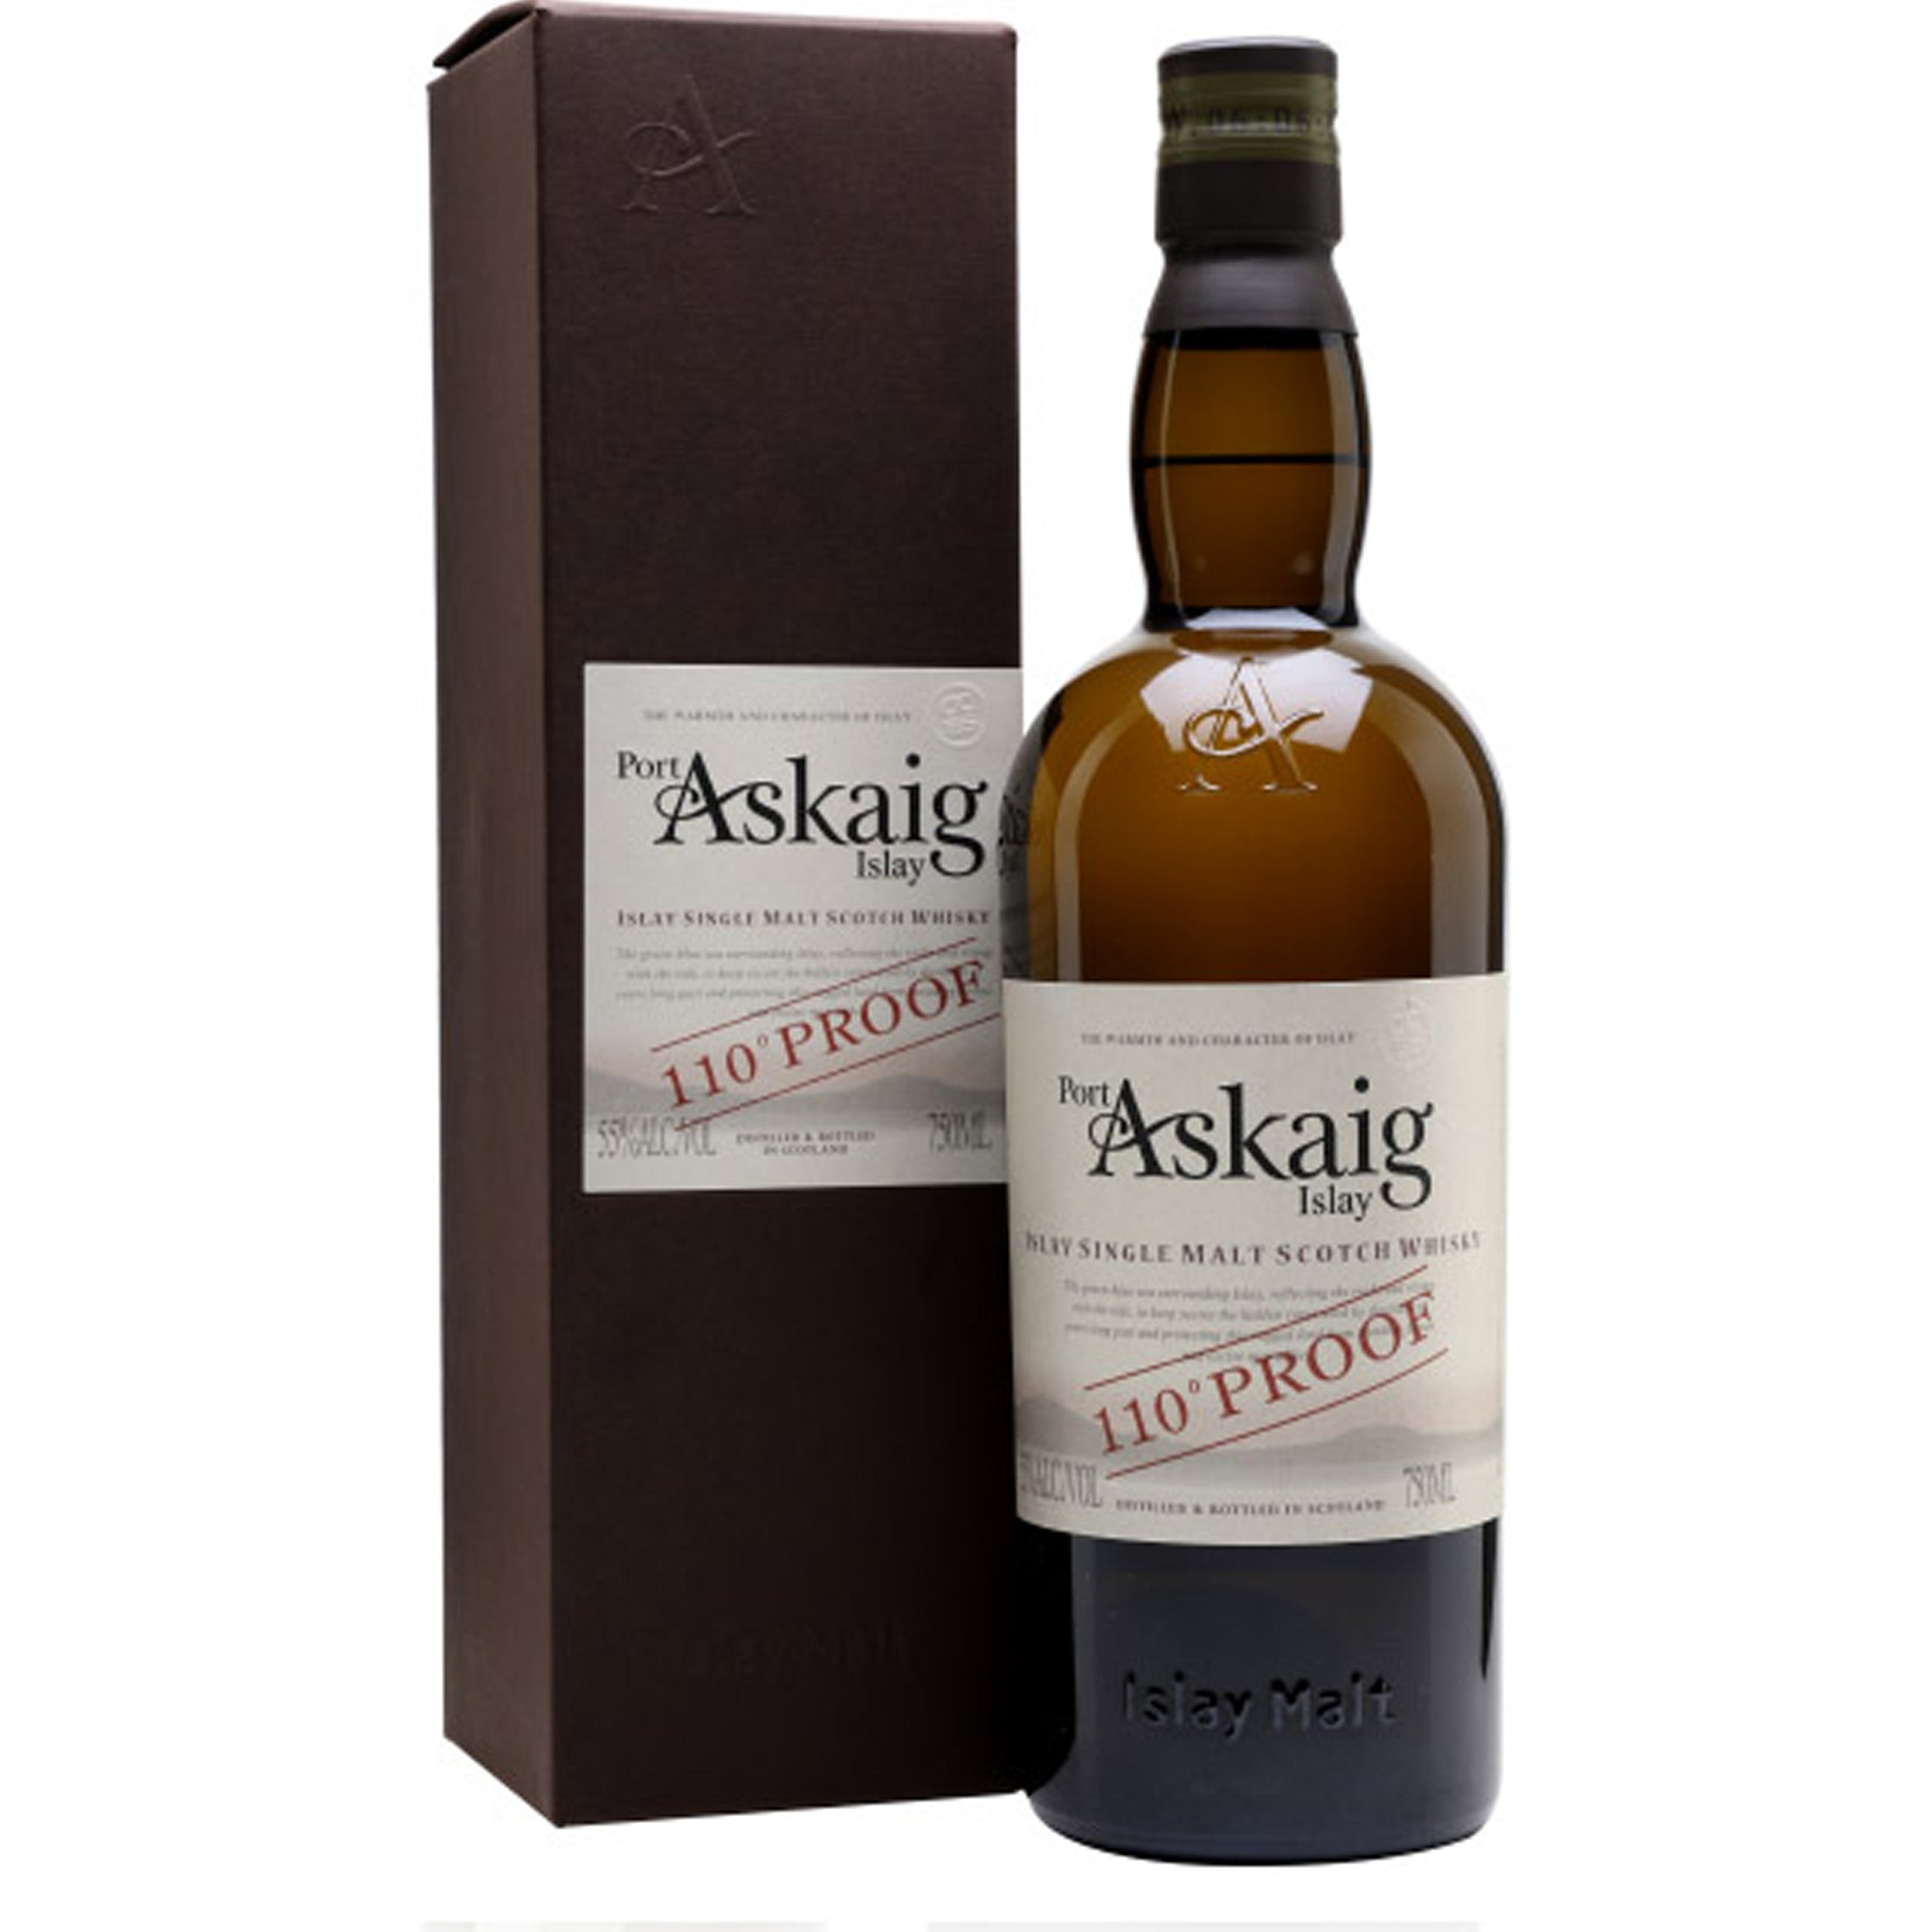 Port Askaig Islay Single Malt Scotch Whisky 110 Proof